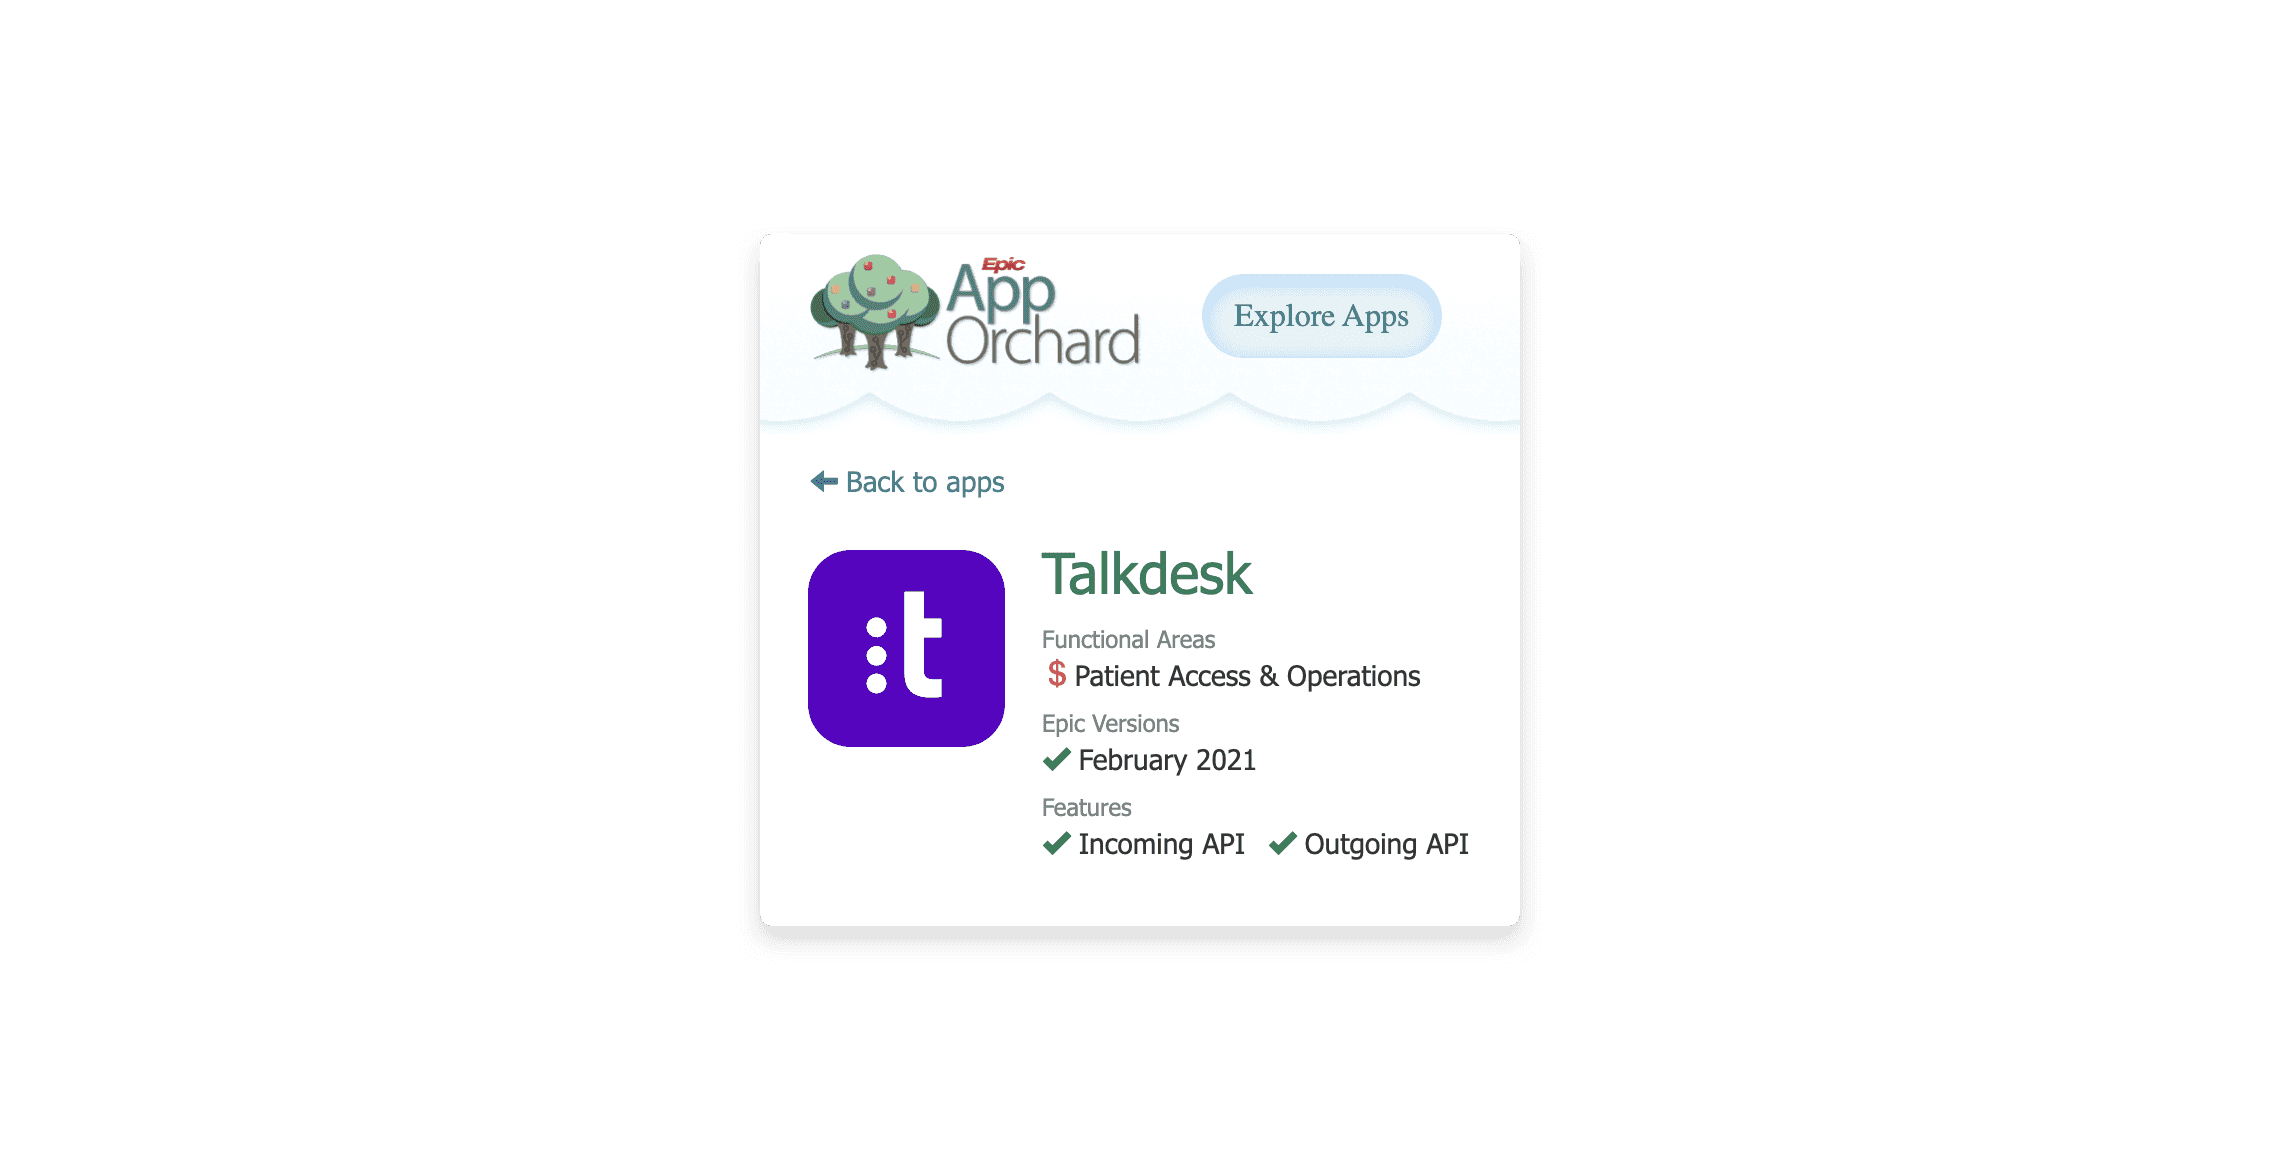 App Orchard Talkdesk